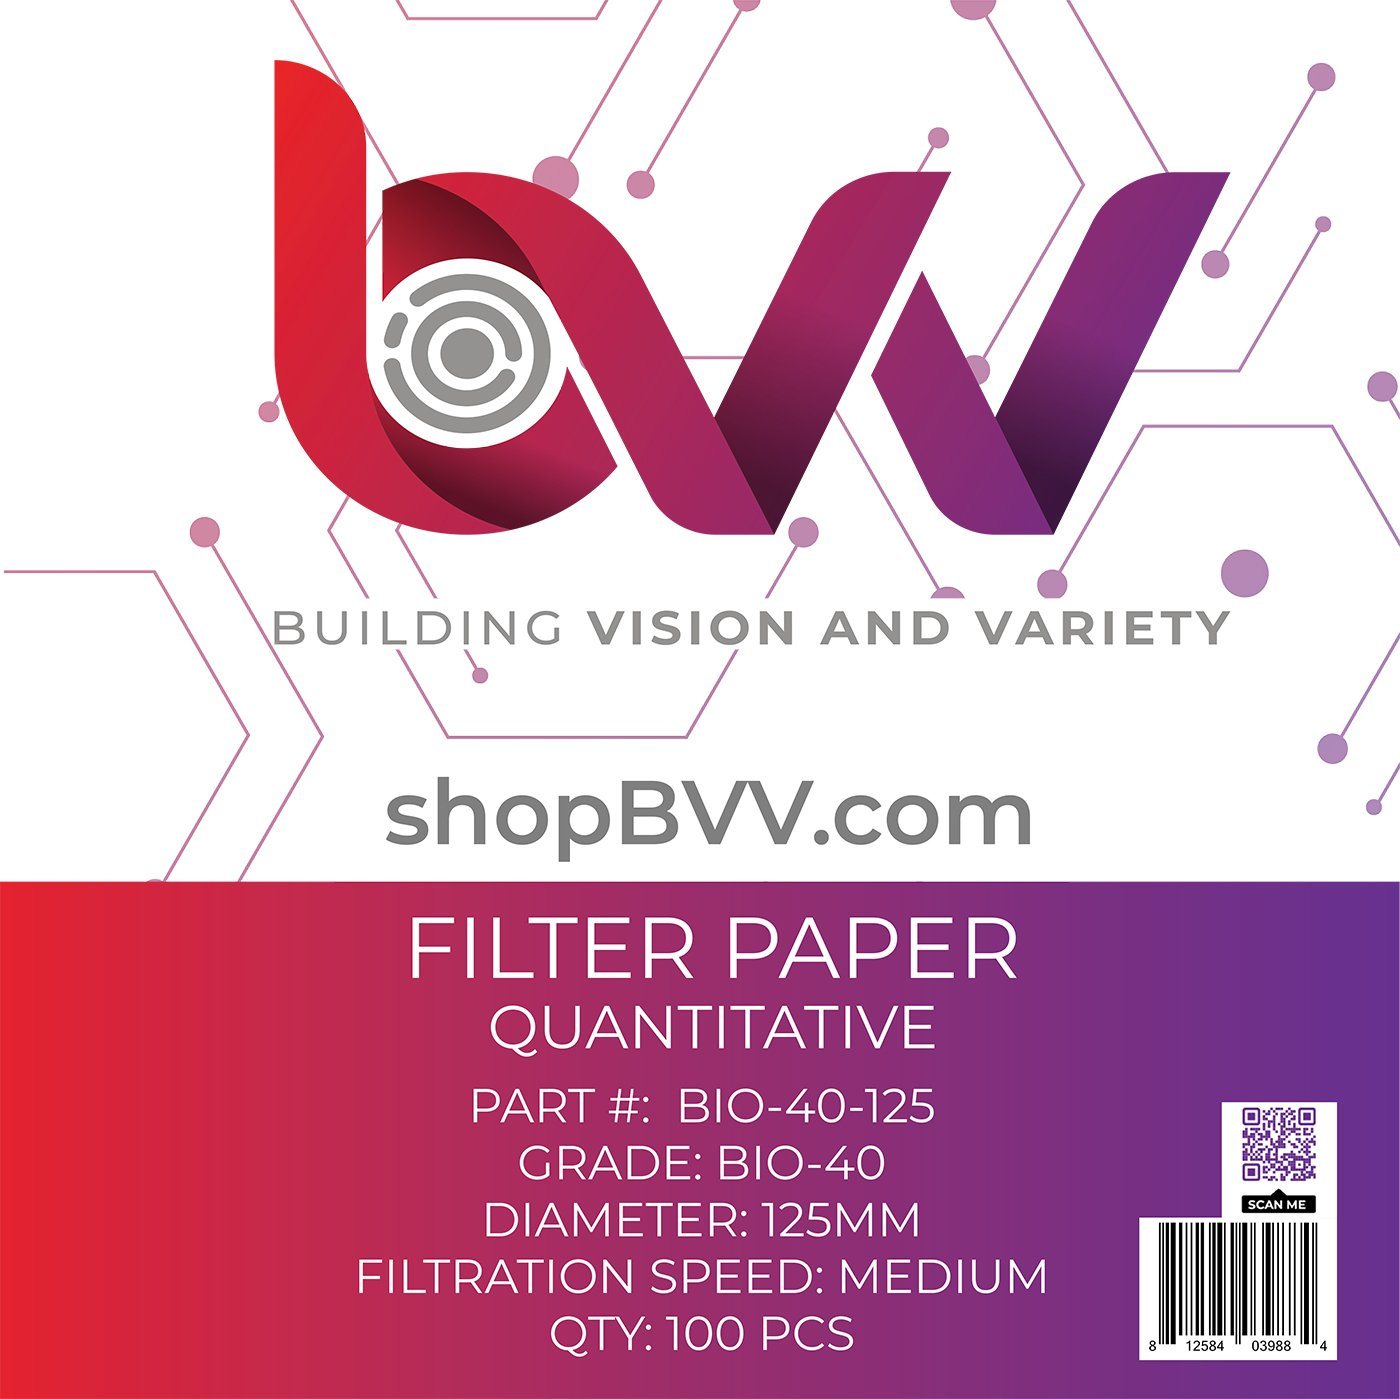 Ashless Filter Papers - 125MM - Quantitative Shop All Categories BVV Grade 40 - Medium - 8um